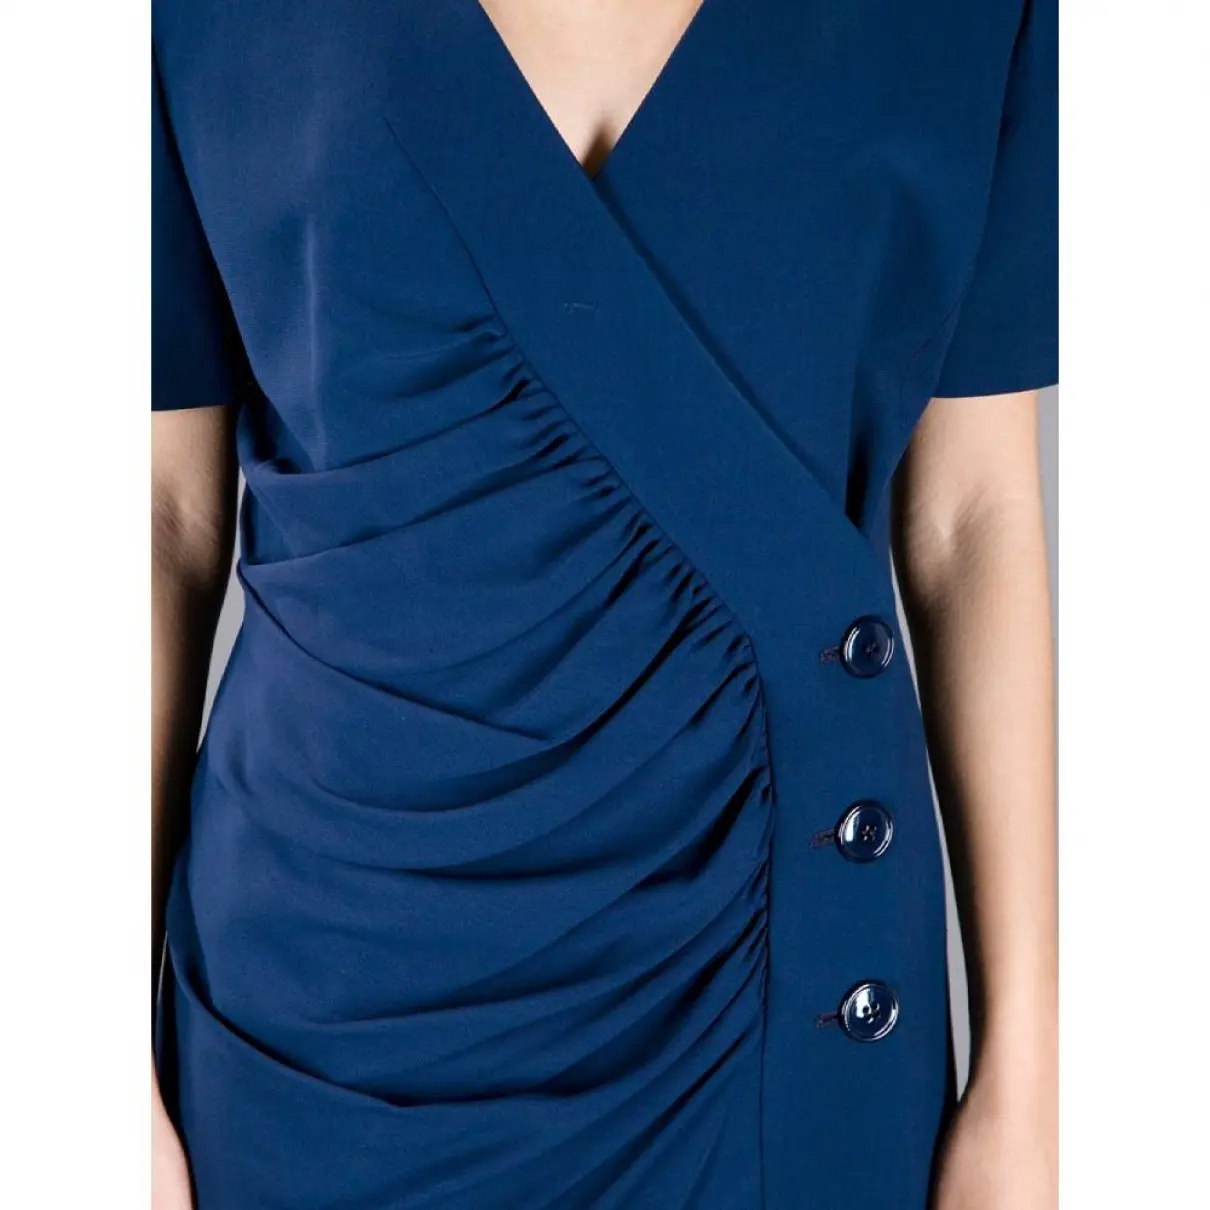 Buy Gianfranco Ferré Silk mid-length dress online